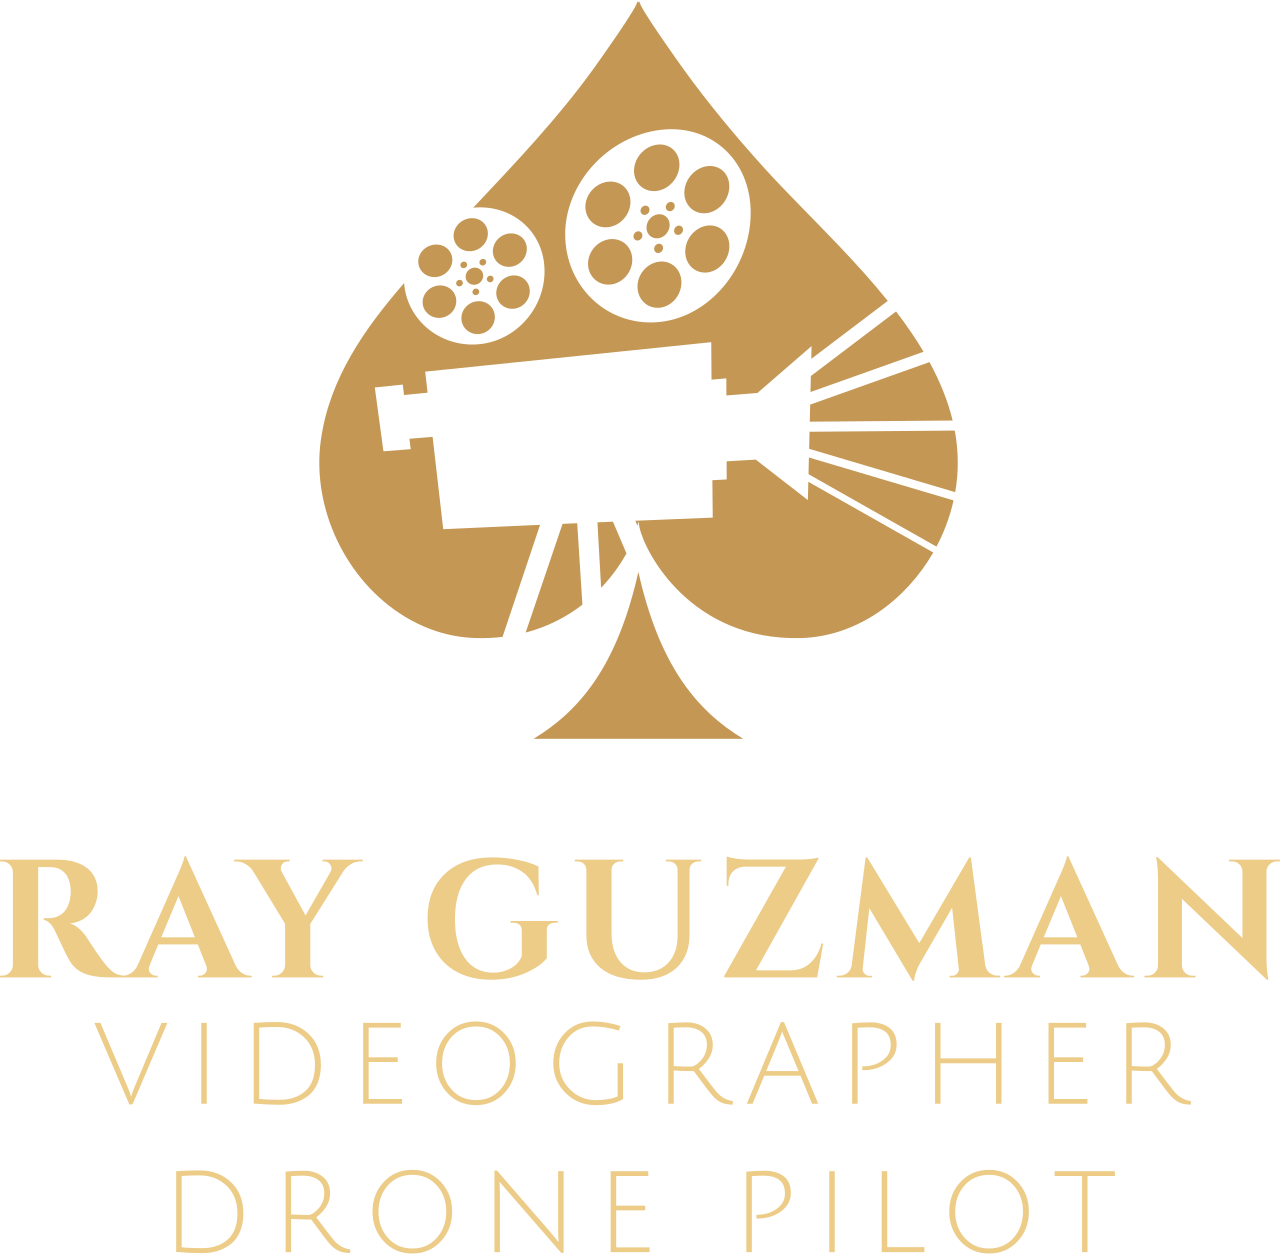 Ray Guzman's logo